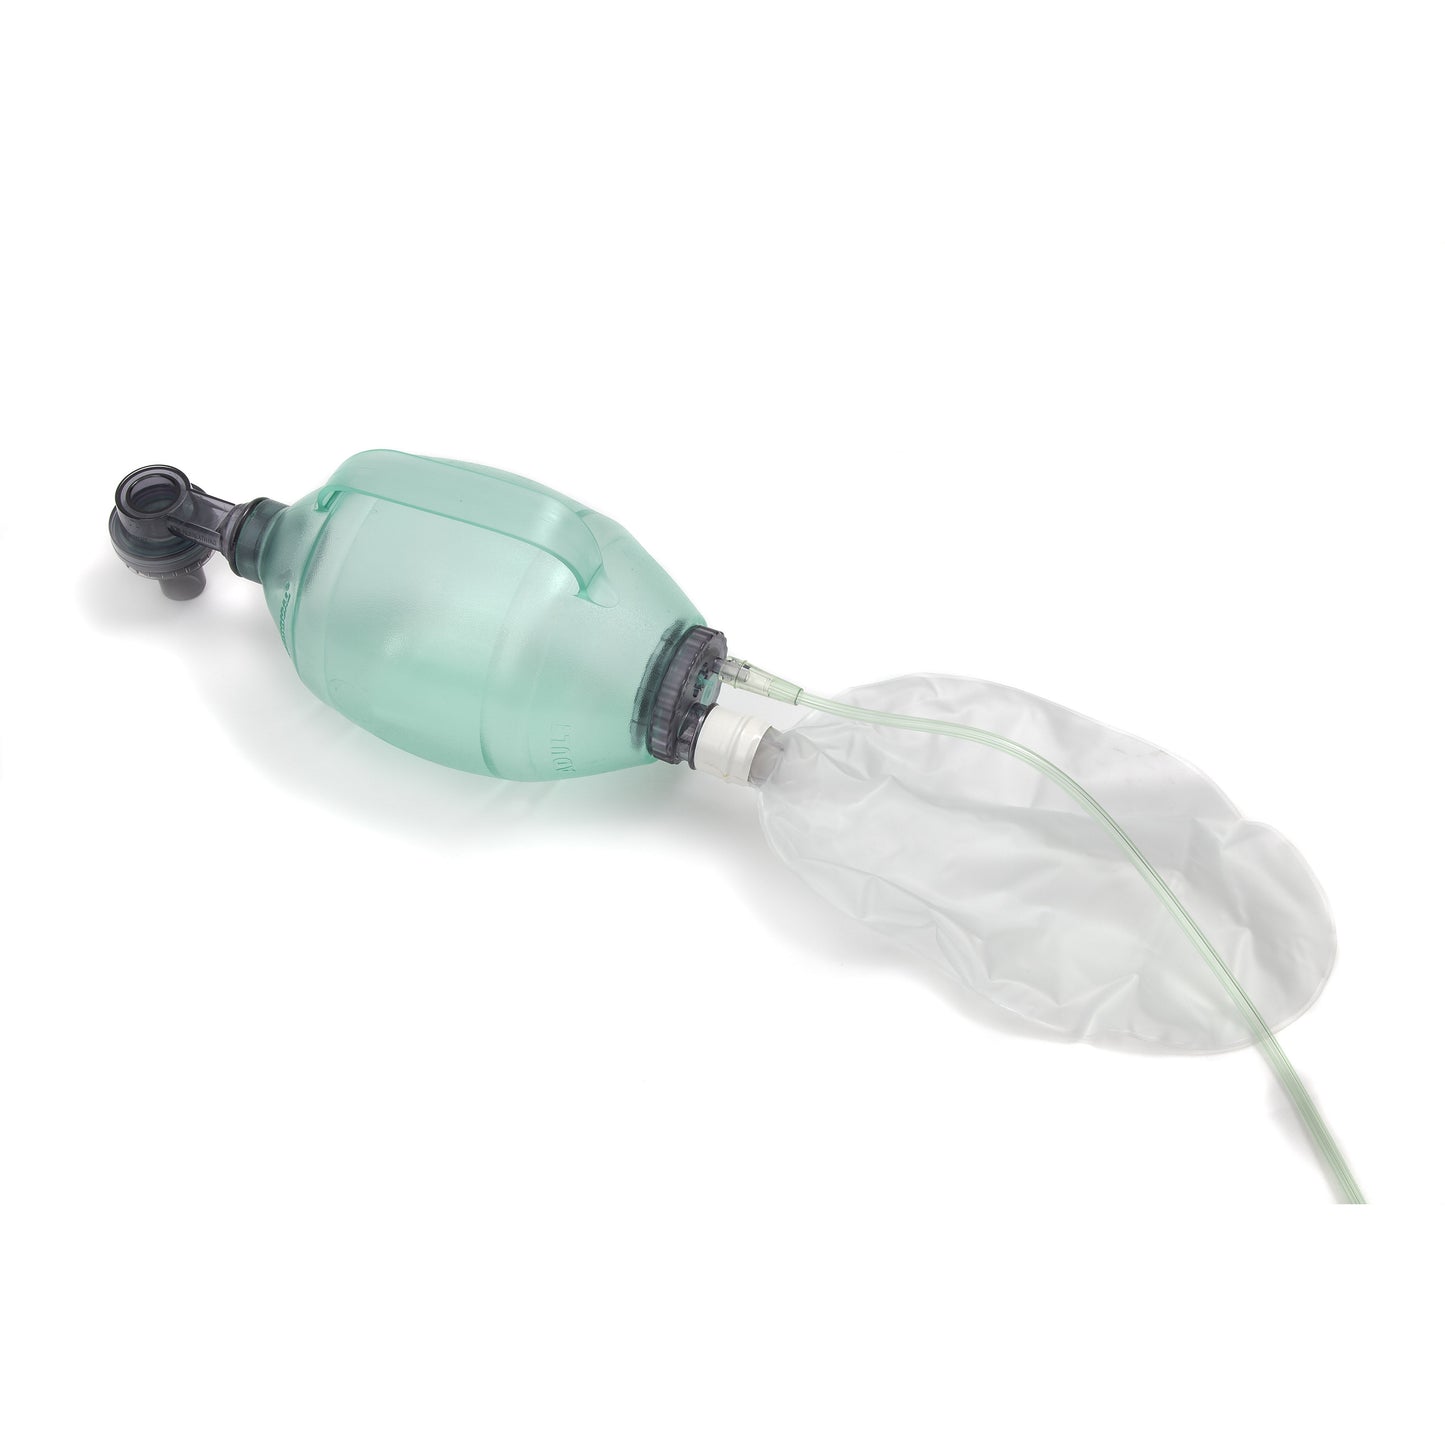 Infant BVM resus system, 280ml bag with pressure relief valve(40cm H20) s 1 mask - Single